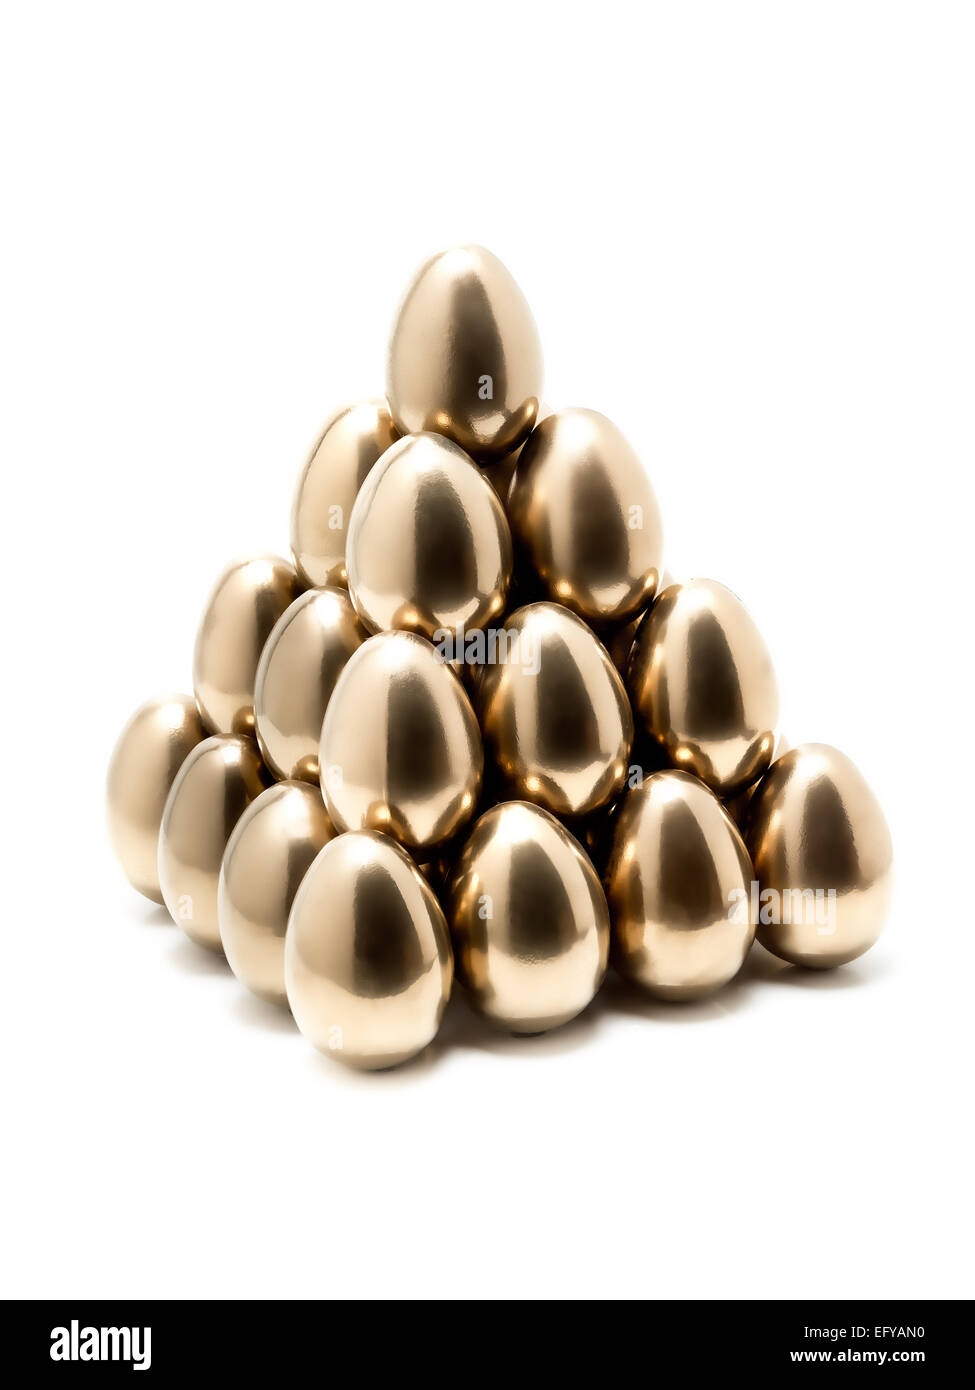 Pyramid of golden eggs on white background Stock Photo